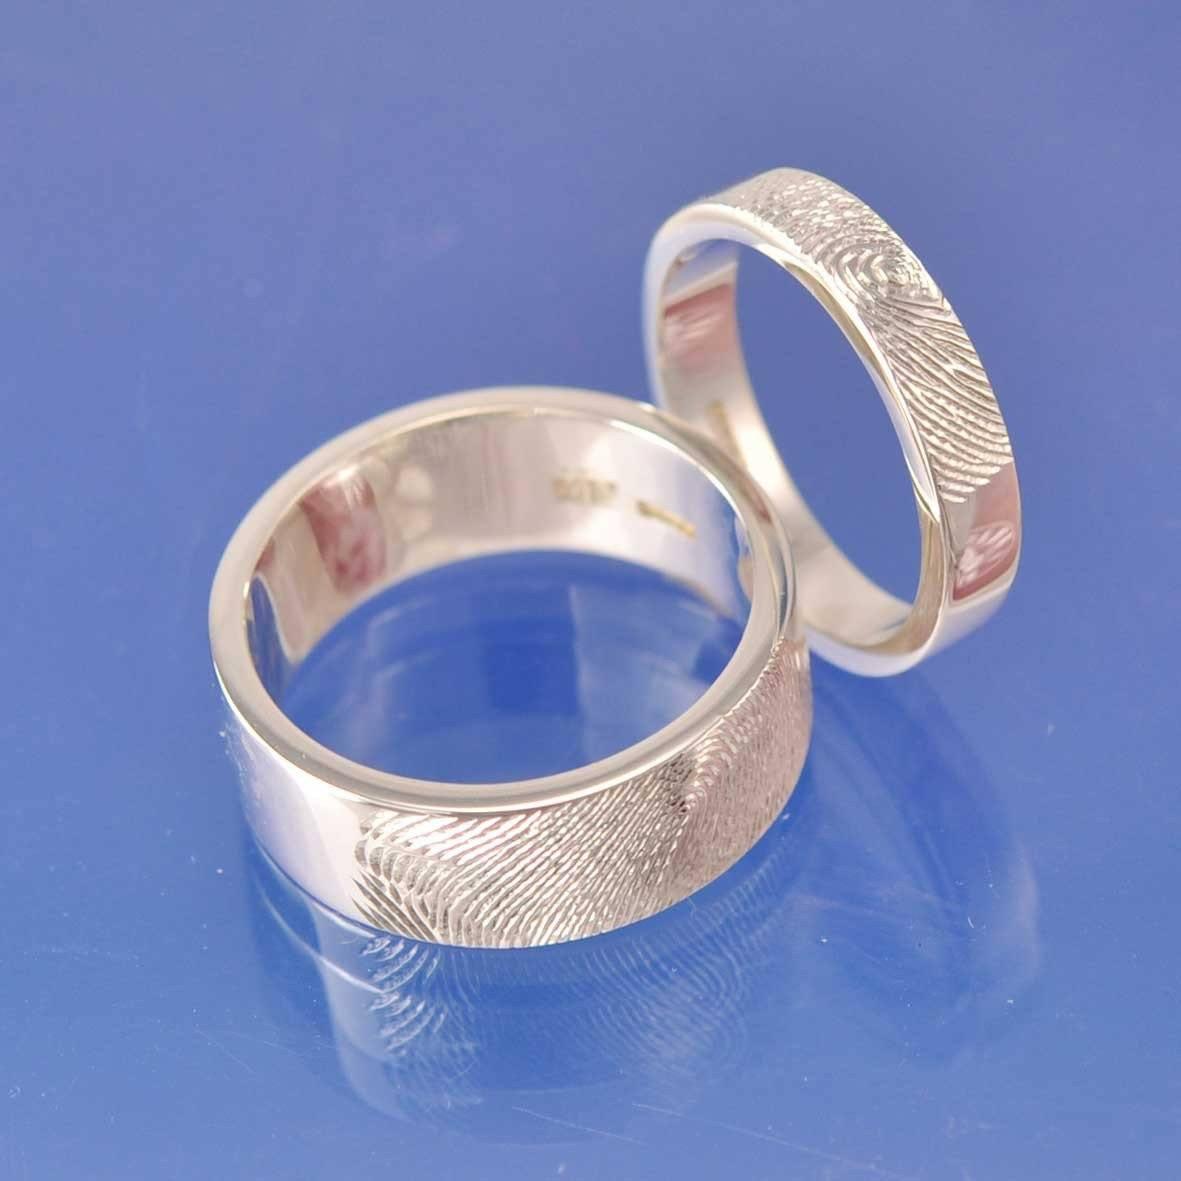 Fingerprint Ring Gold - 9k Ring by Chris Parry Jewellery